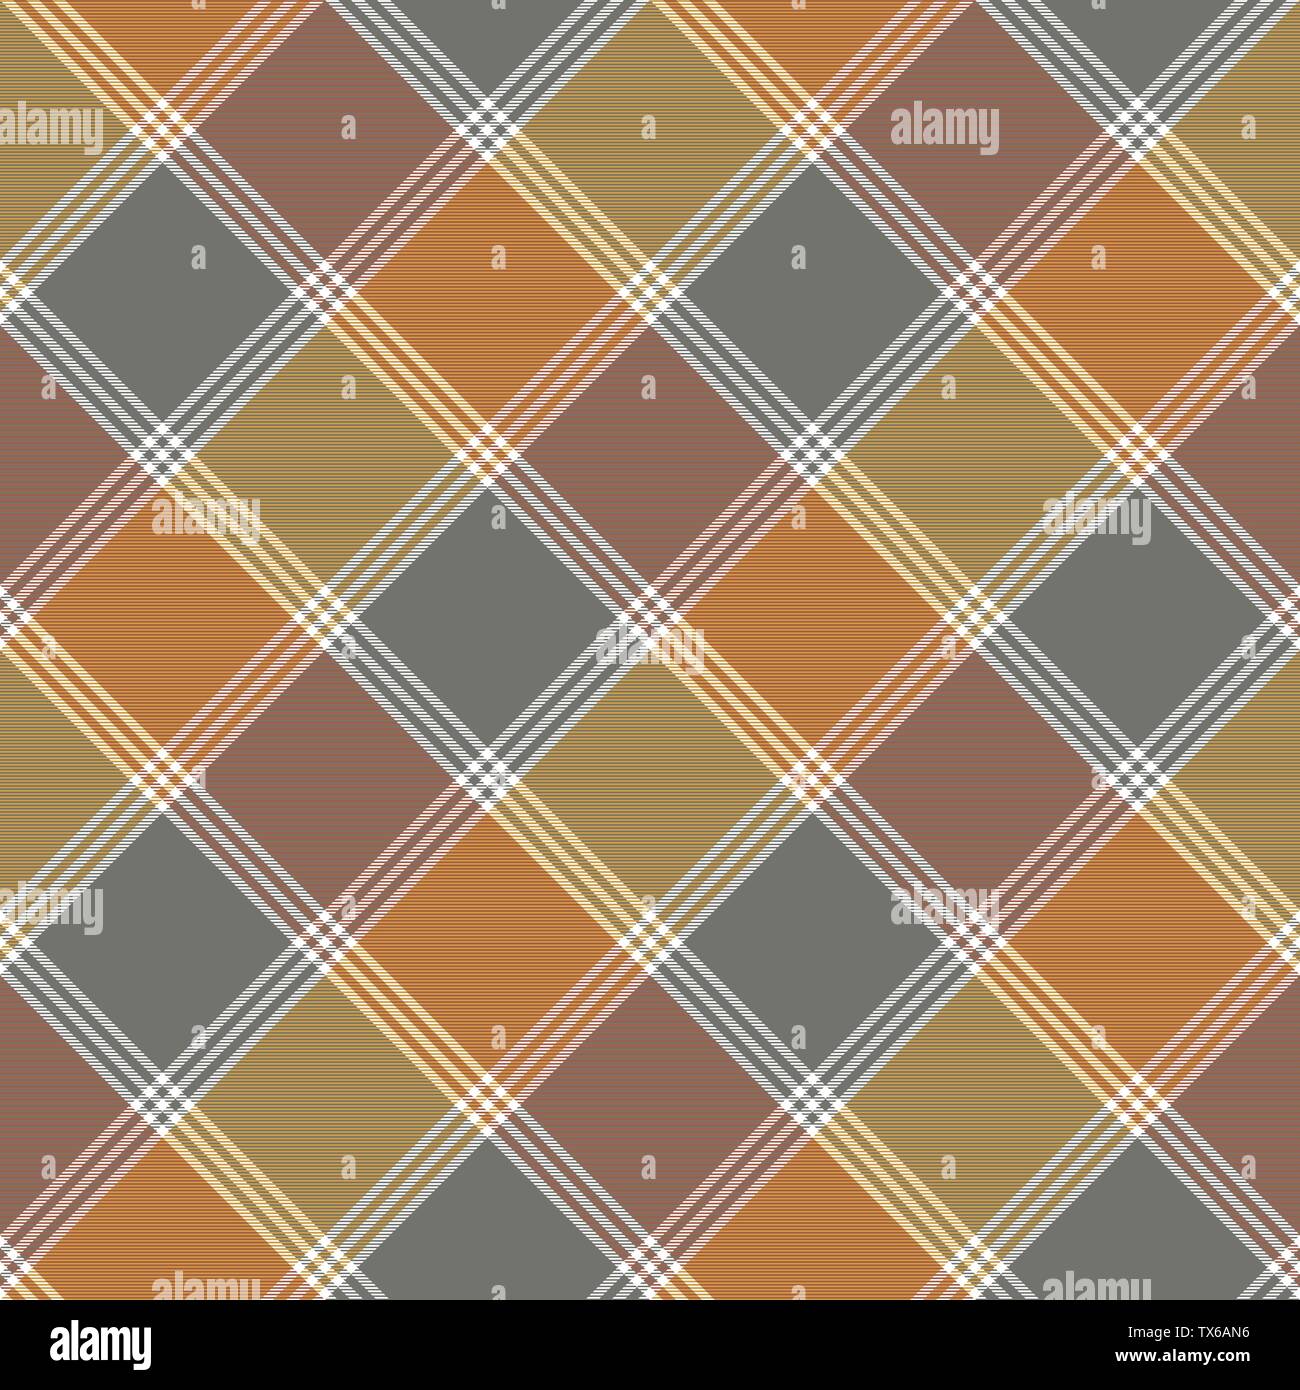 Retro fabric texture check seamless pattern. Vector illustration. Stock Vector